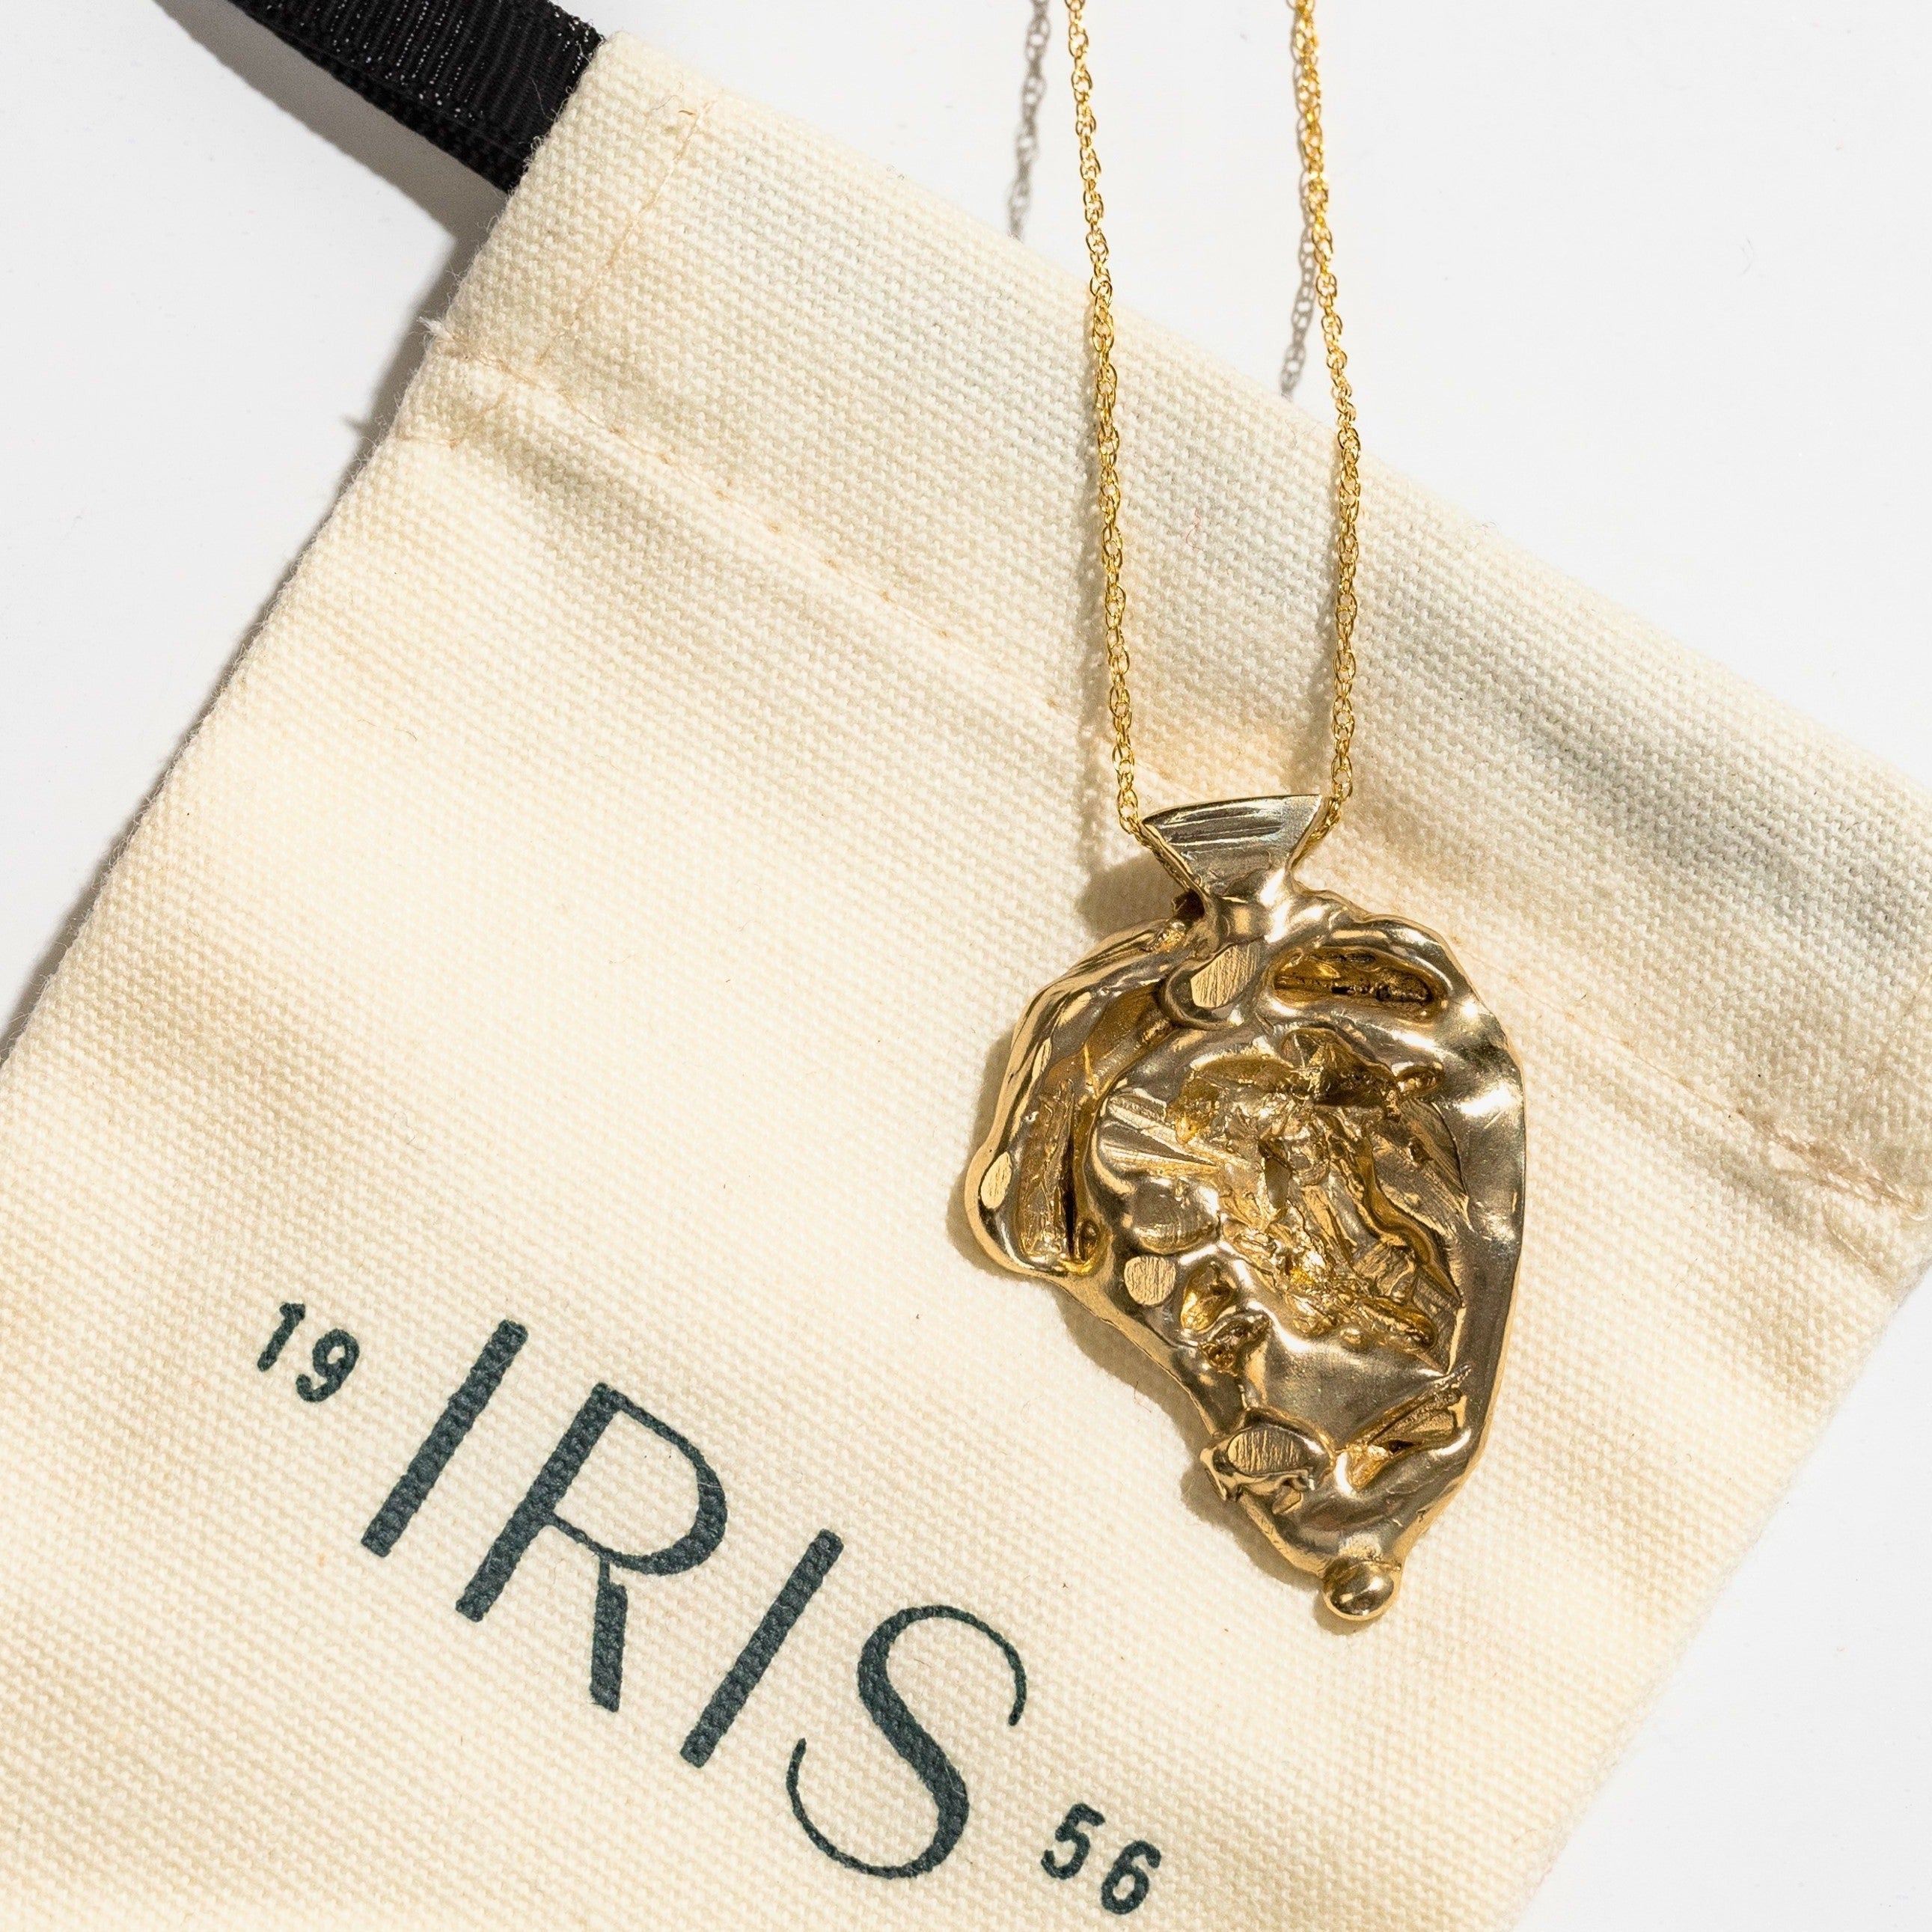 The Goddess Medallion Necklace - Iris 1956